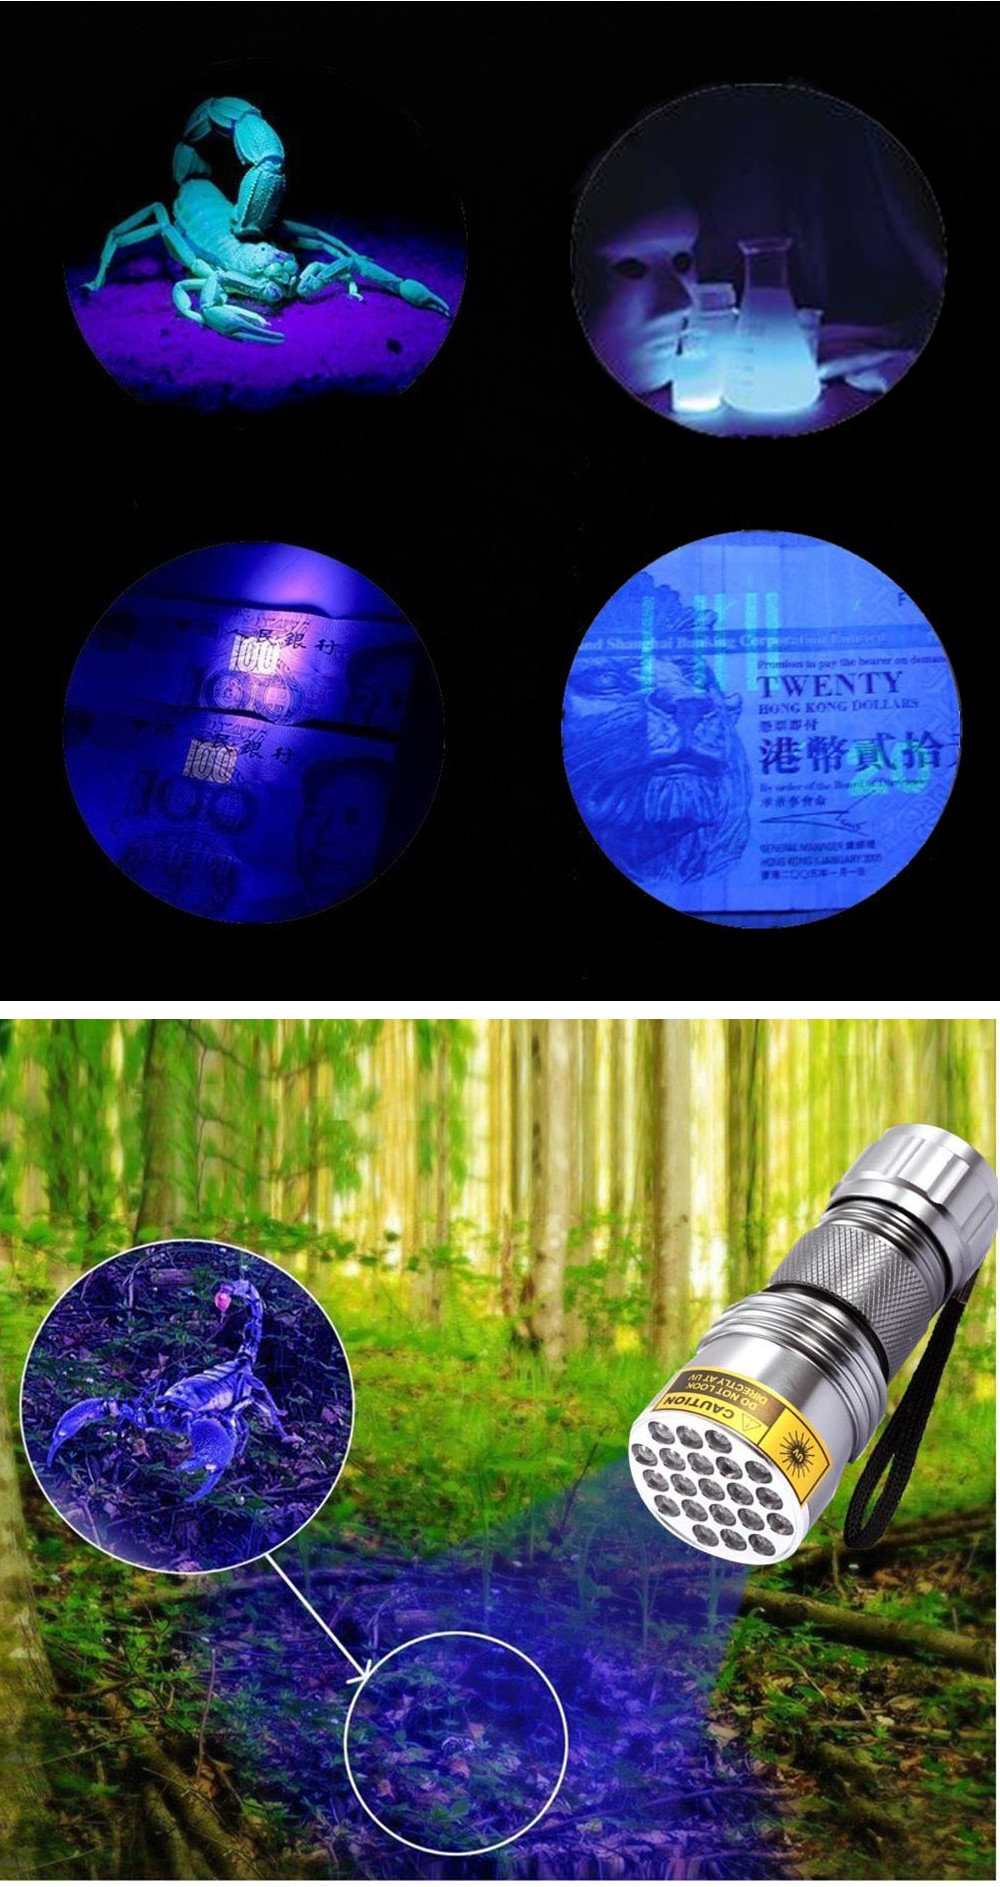 XANES-U03-21LEDs-400nm-Violet-UV-LED-Flashlight-Fluorescence-Sterilization-Banknote-Detection-Pen-1287882